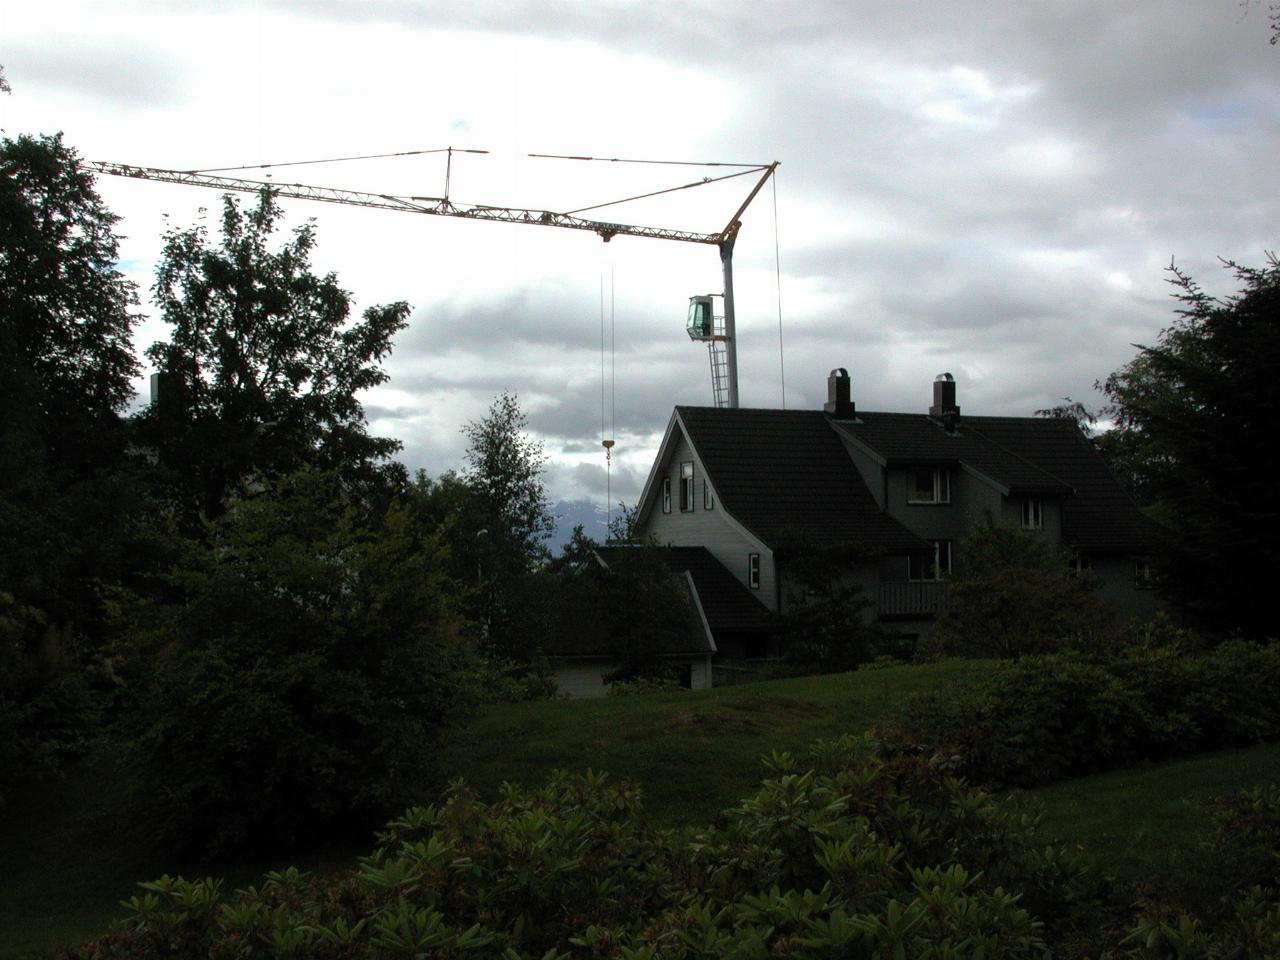 KPLU Viking Jazz: Construction crane amidst city housing as seen from Reknes Park, Molde